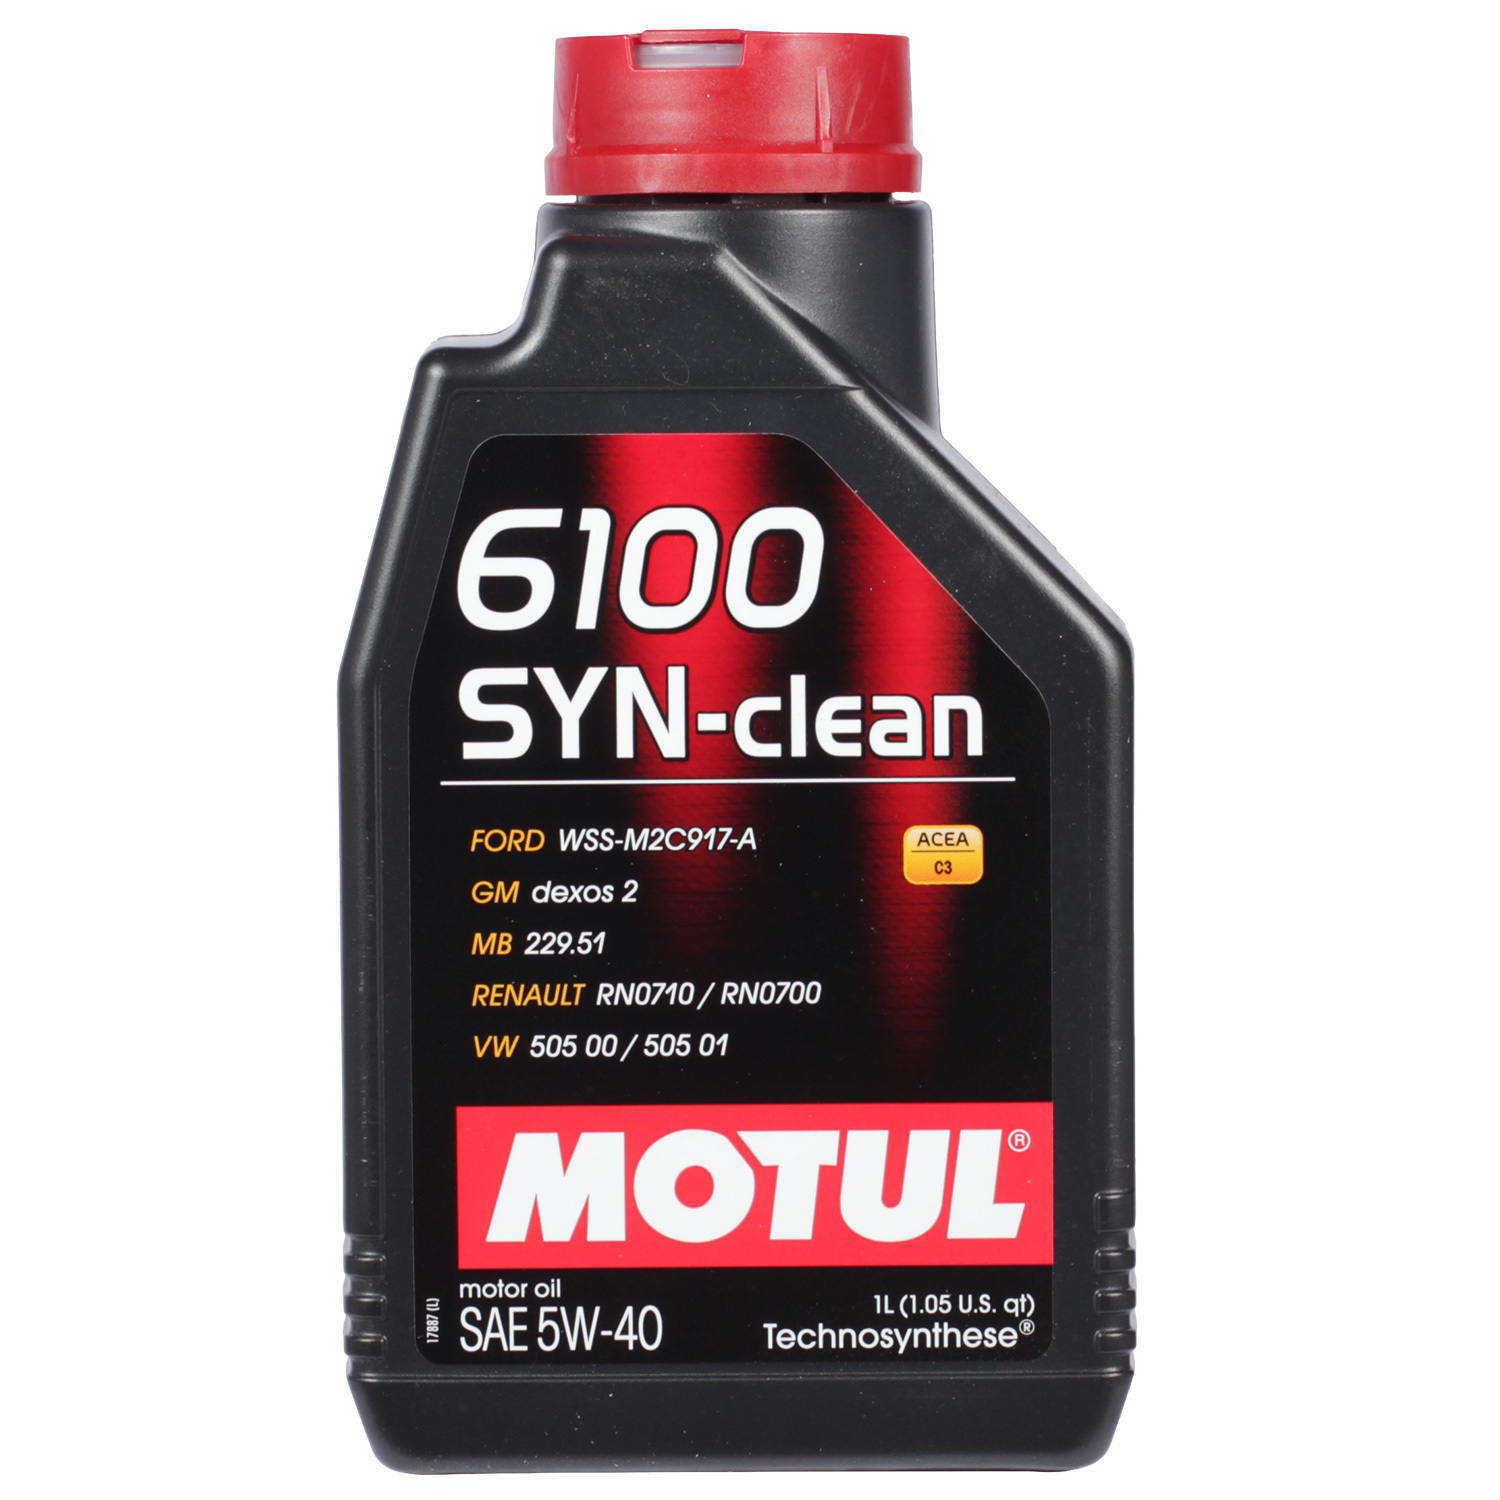 Motul Моторное масло Motul 6100 SYN-CLEAN 5W-40, 1 л motul моторное масло motul 8100 x cess 5w 40 60 л